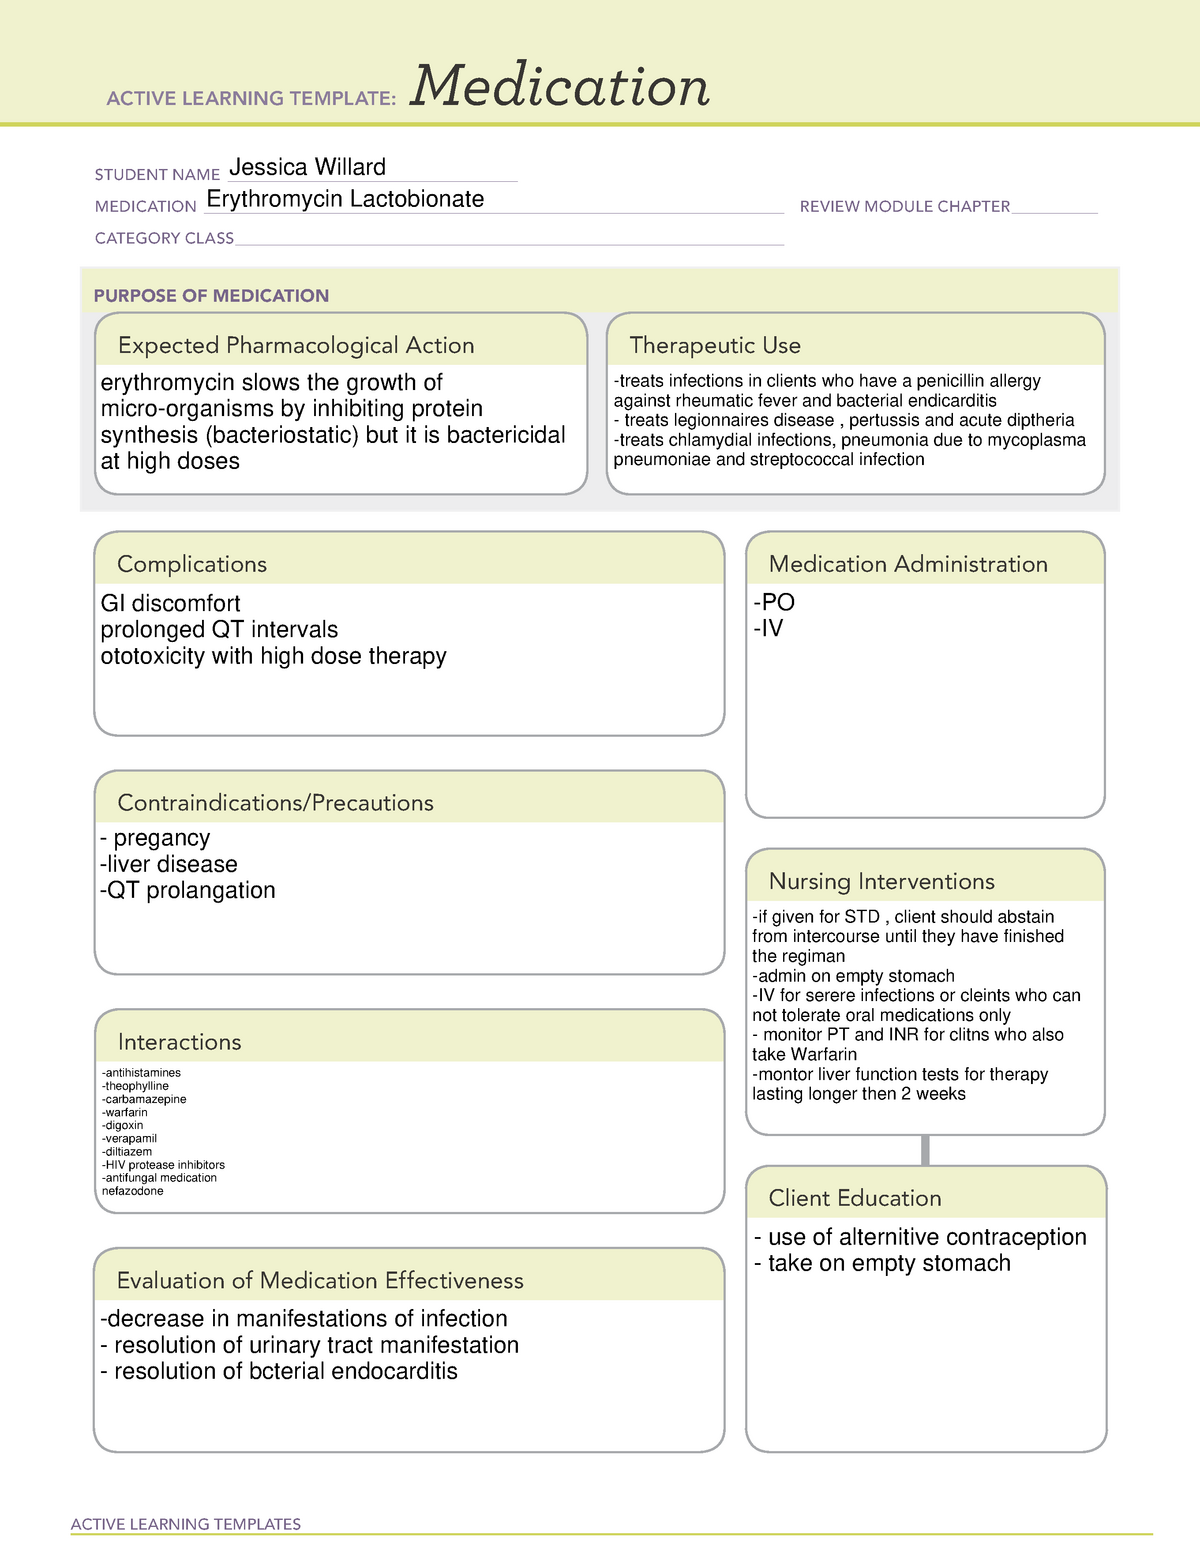 erythromycin-lactobionate-active-learning-templates-medication-student-name-studocu